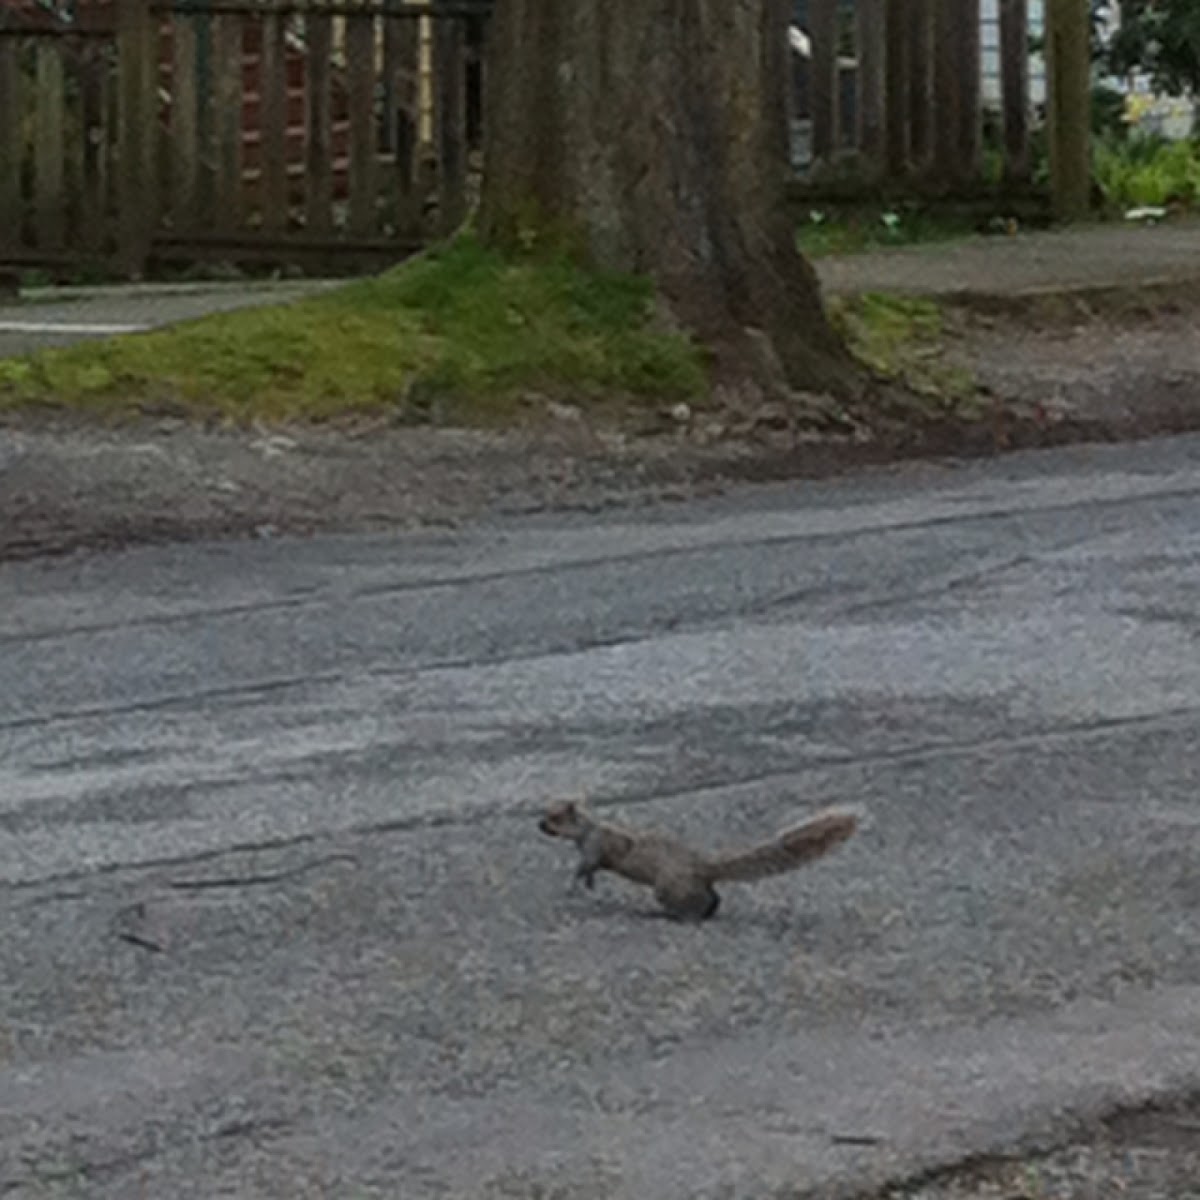 Brown squirrel